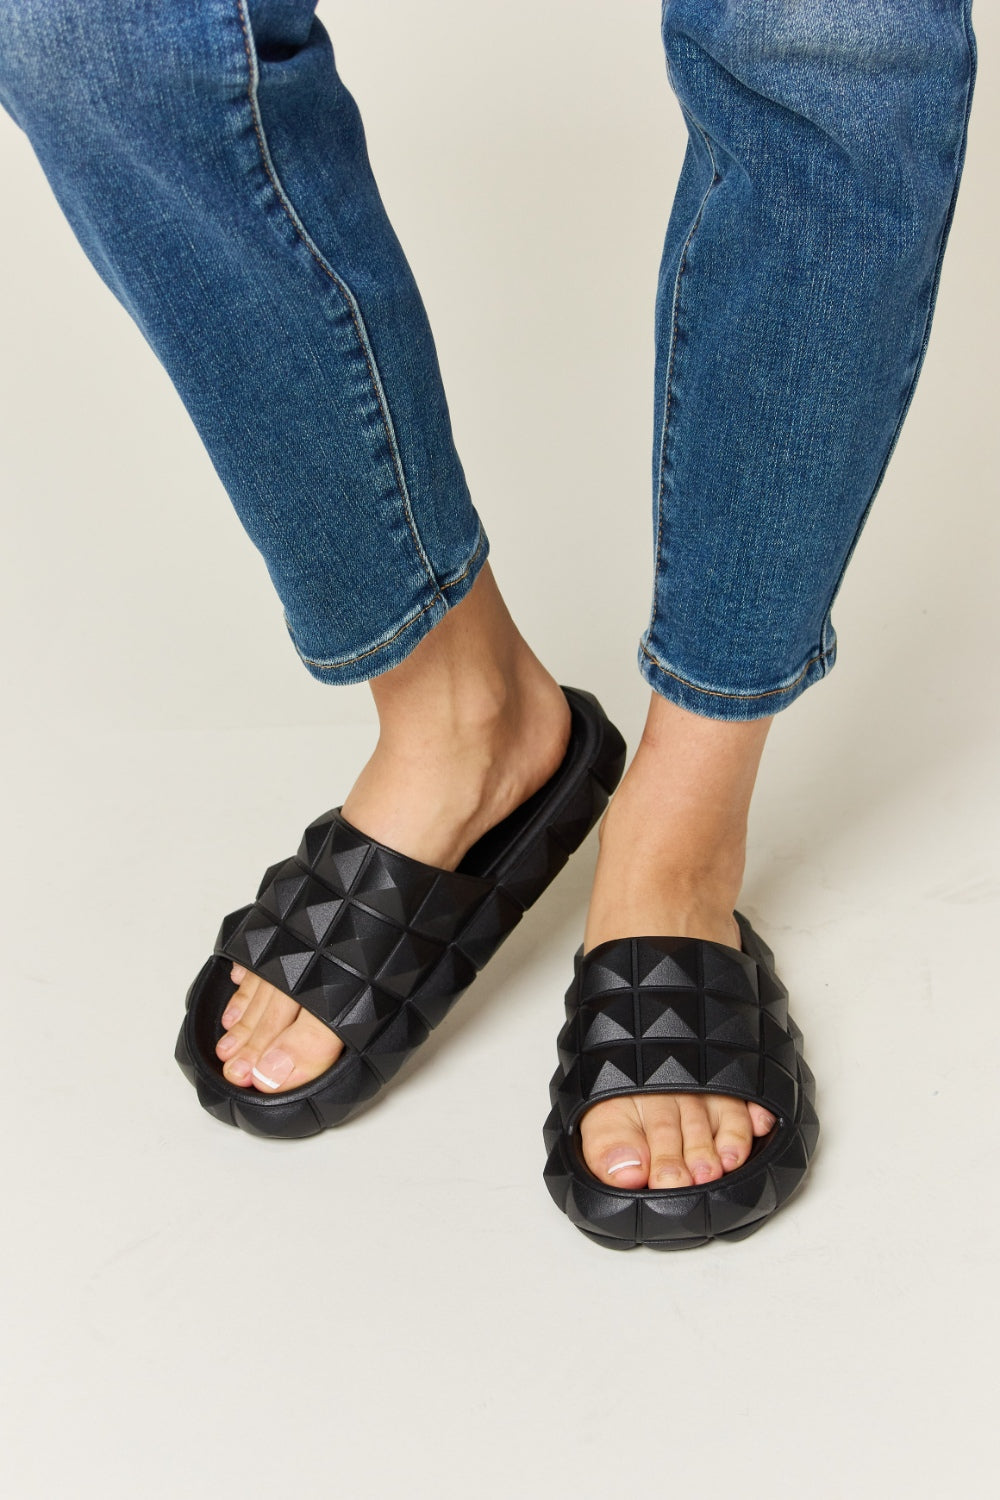 WILD DIVA Pyramid Stud Toe Band Footbed Sandals - SELFTRITSS